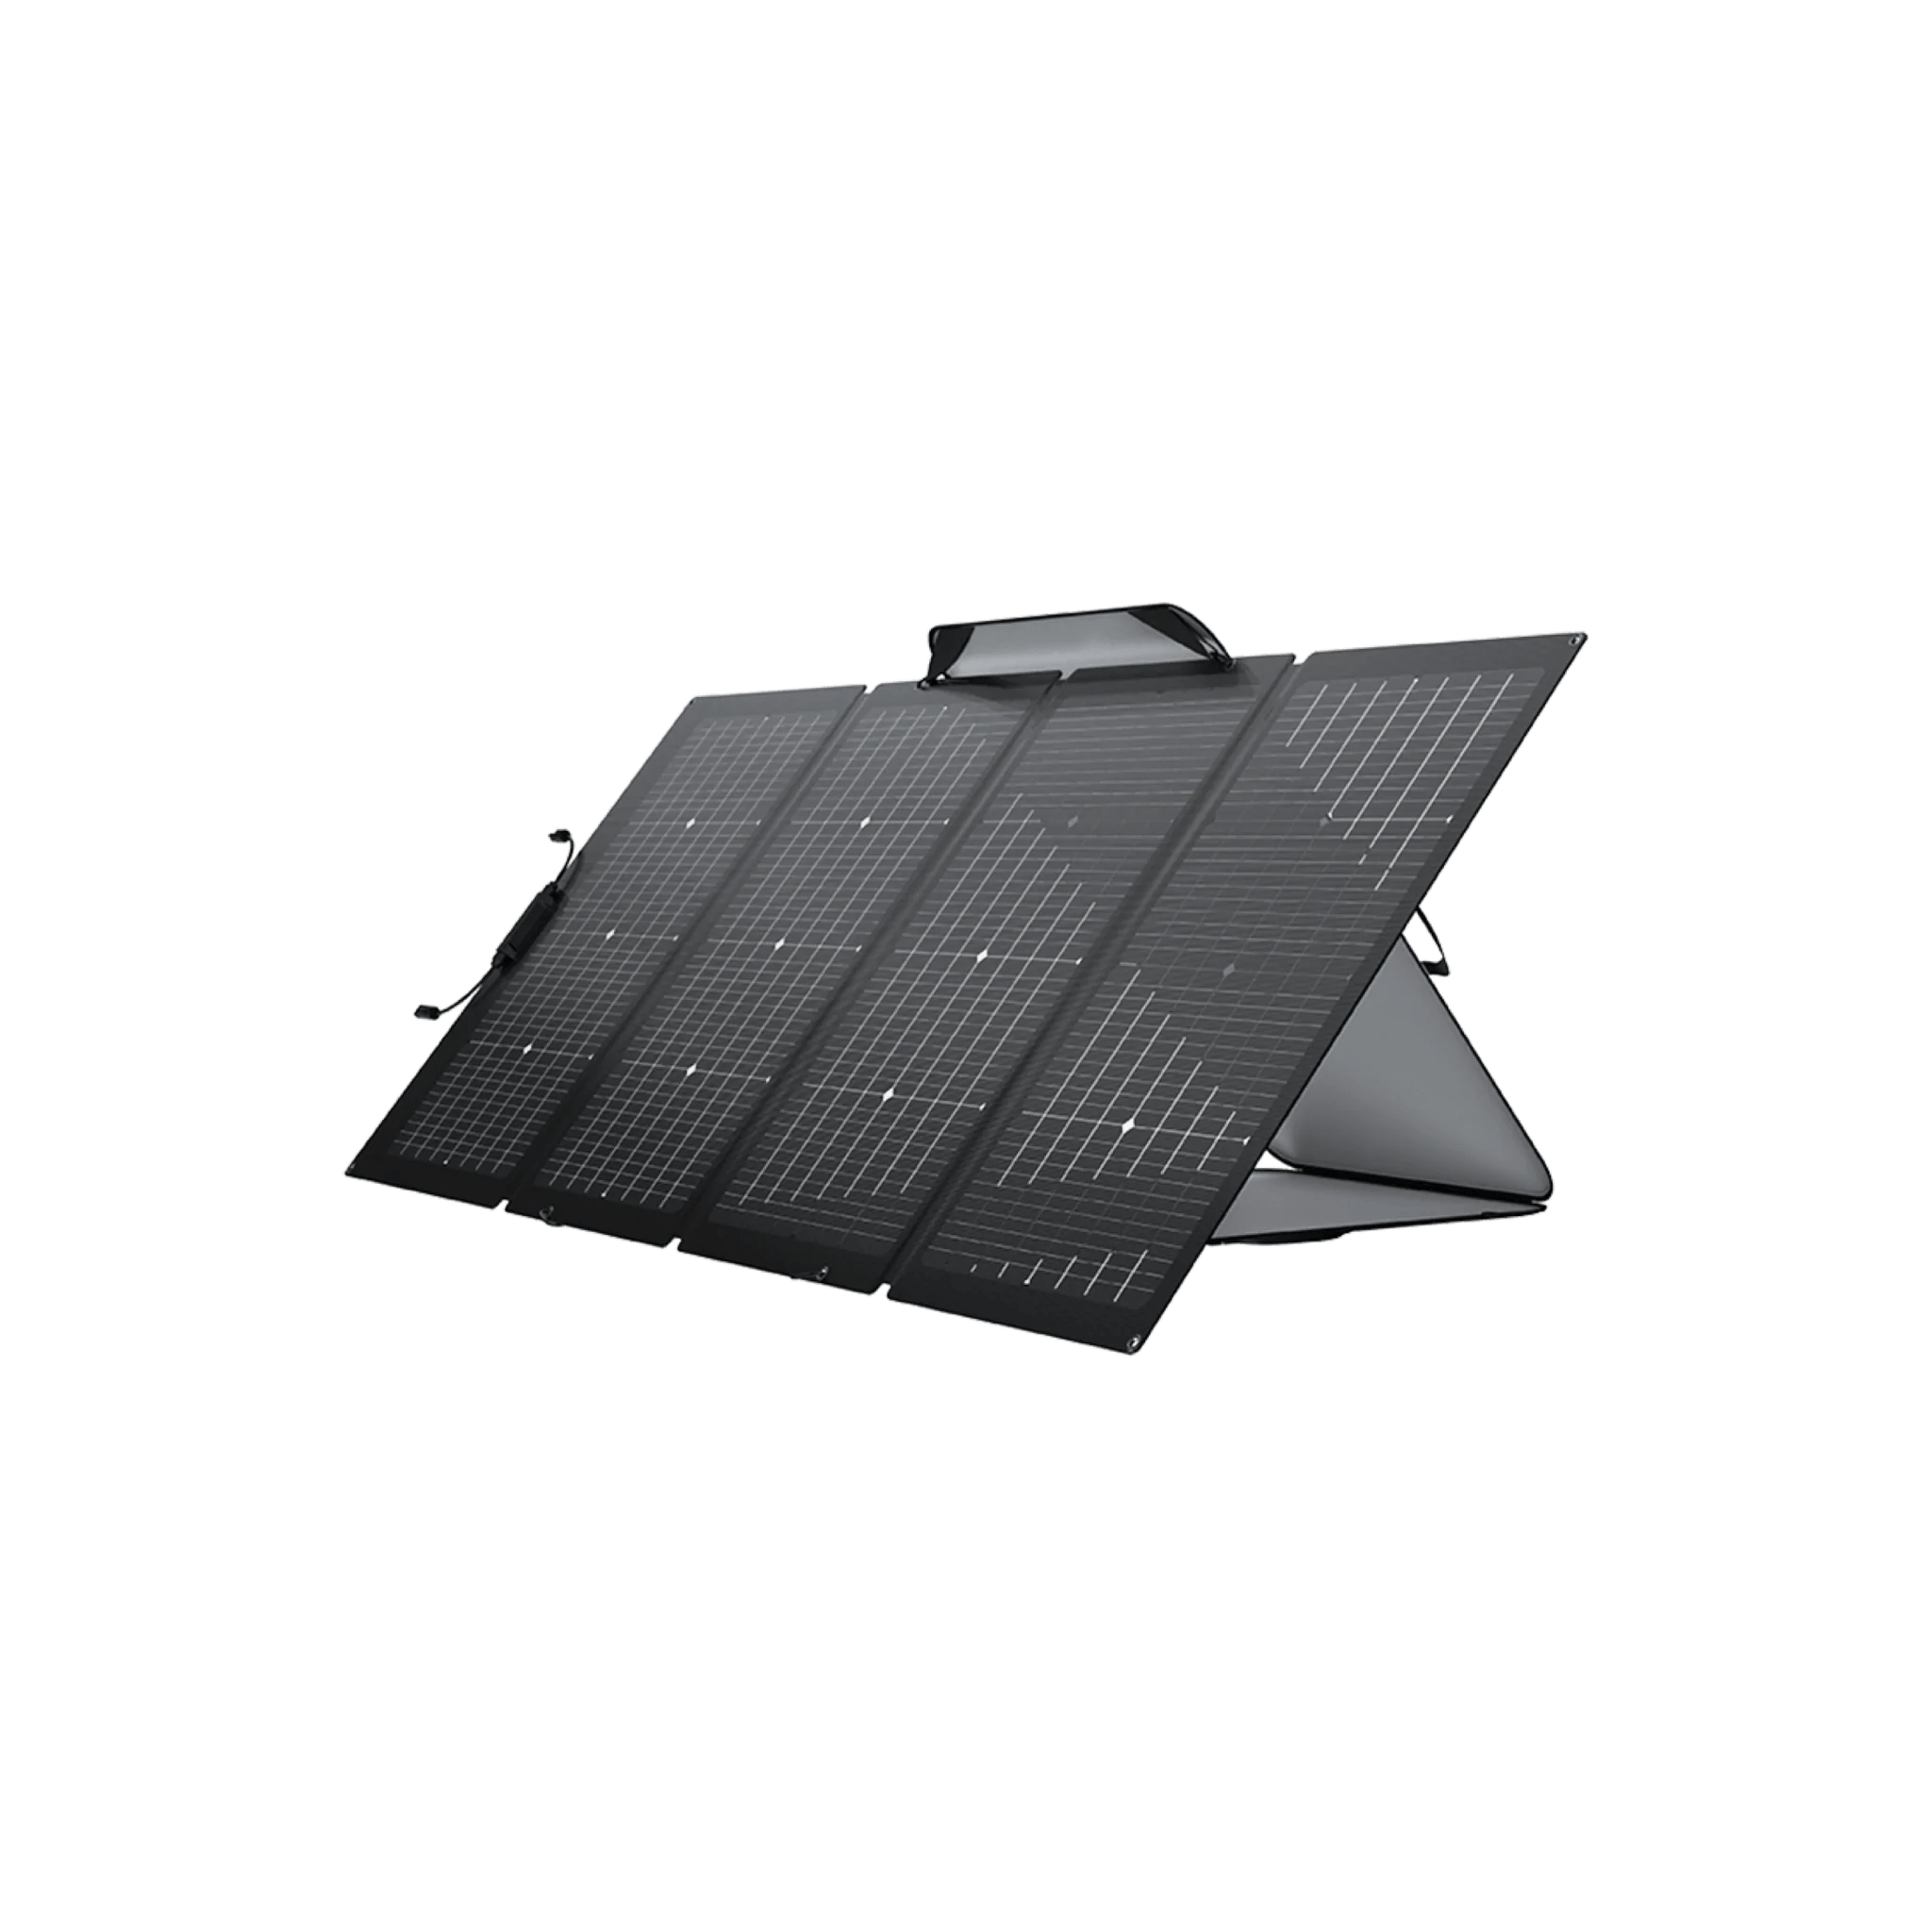 EcoFlow River 2 Pro + 1x 220W Solar Panel Solar Generator Kit